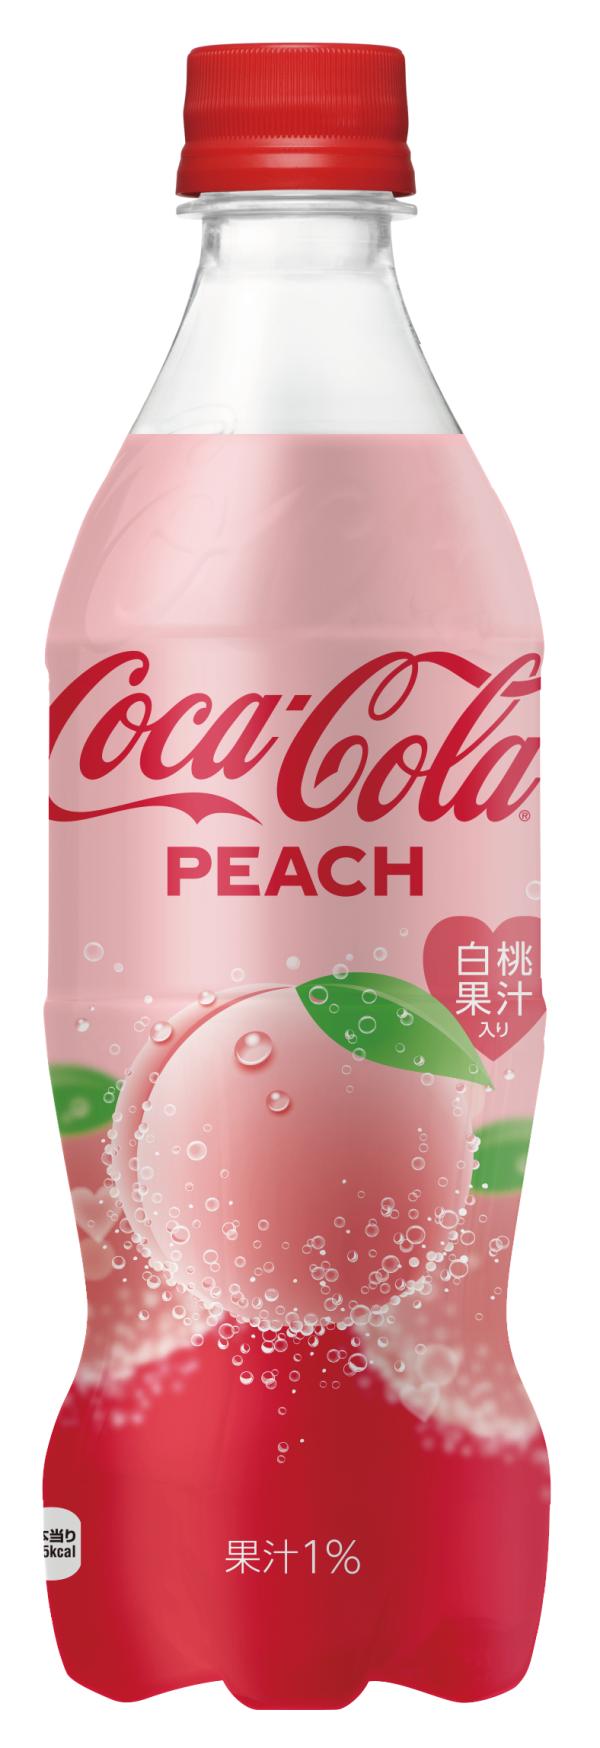 Coke Peach flavor